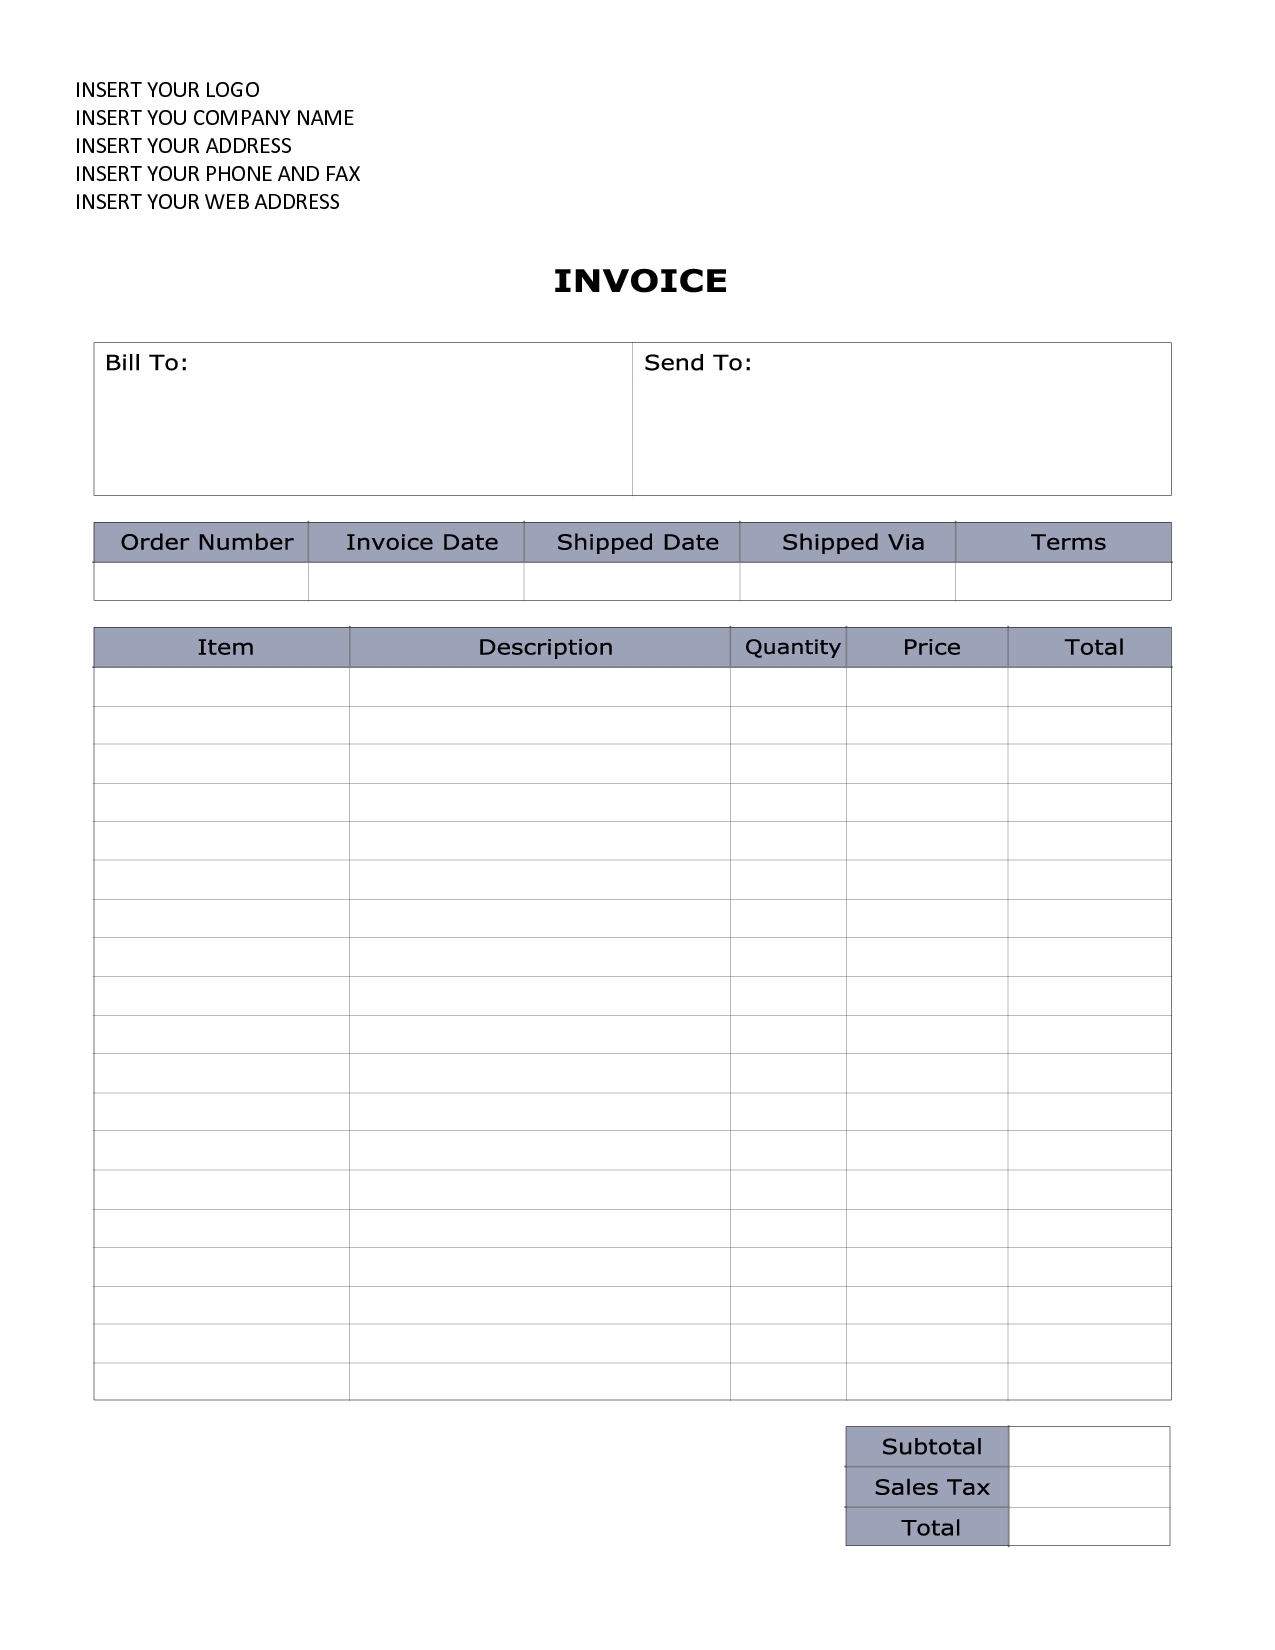 word document invoice template invoice template free 2016 invoice template free word